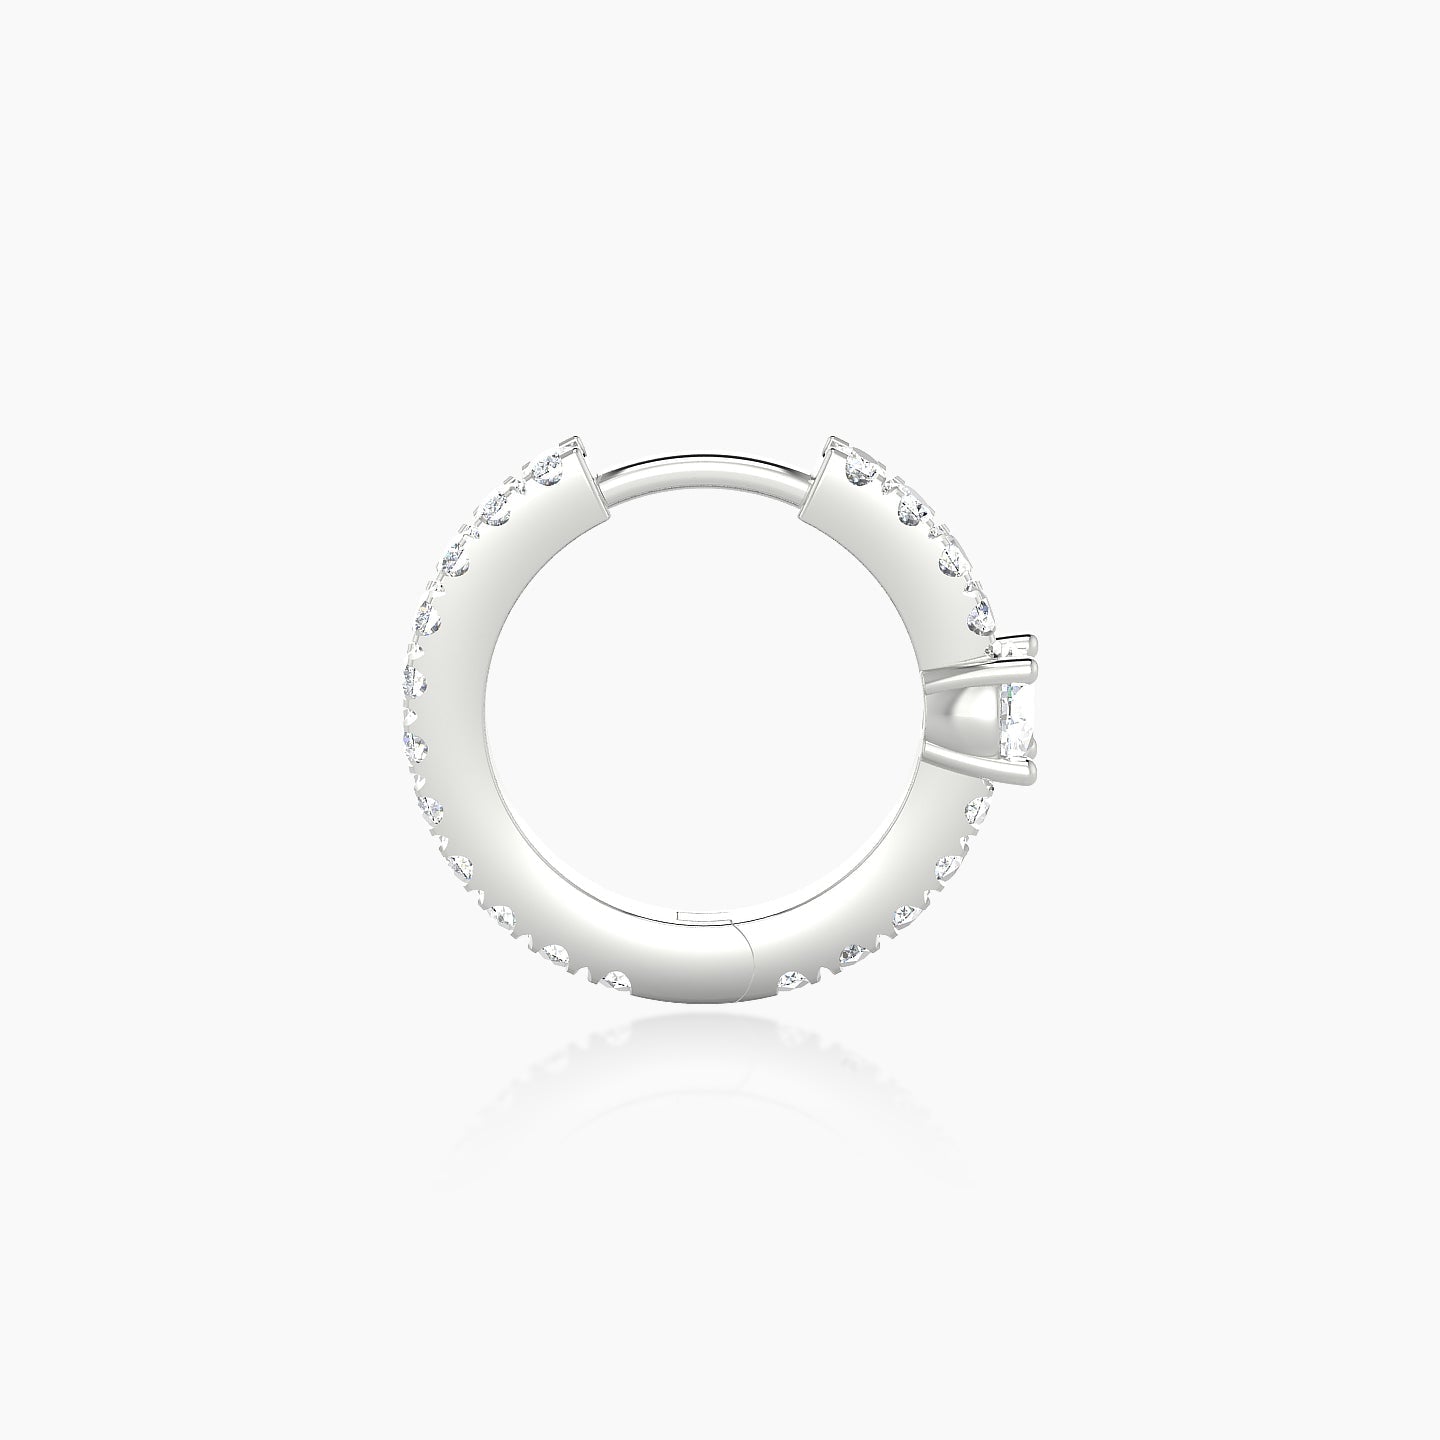 Inanna | 18k White Gold 8 mm Round Diamond Nose Ring Piercing